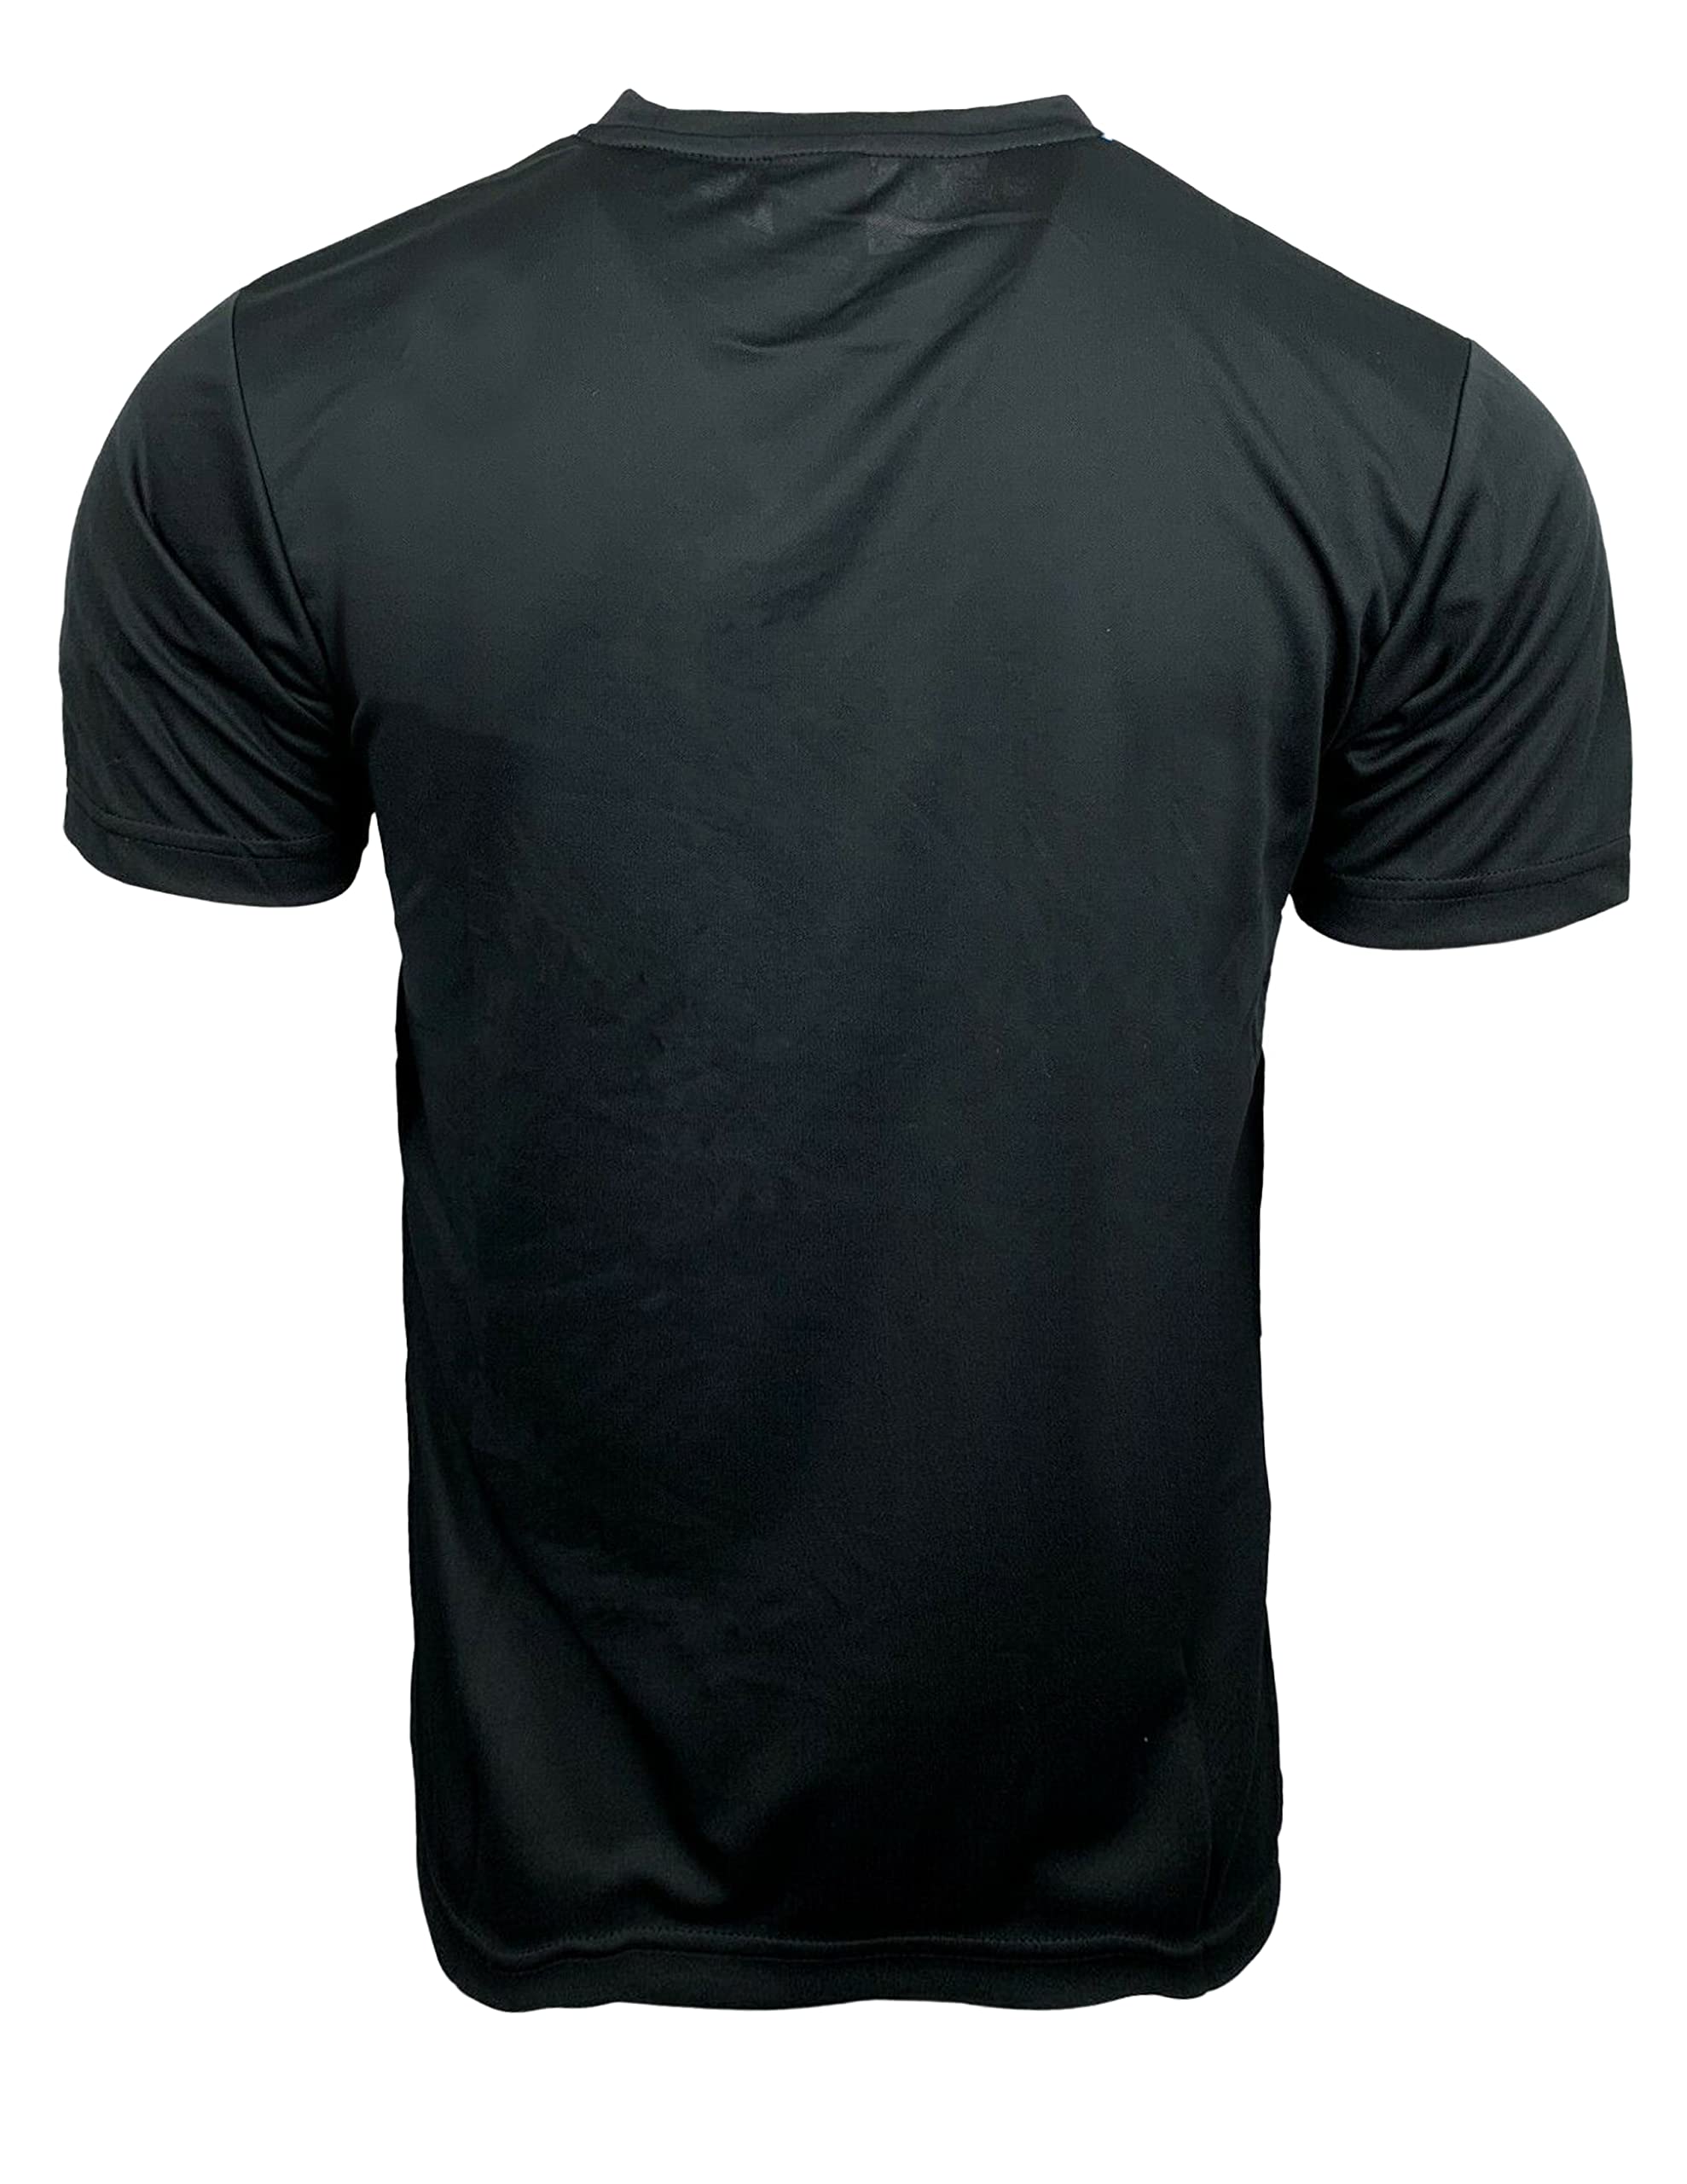 Boy's Soccer Shirt, Official Licensed Madrid Tee Shirt YL Black